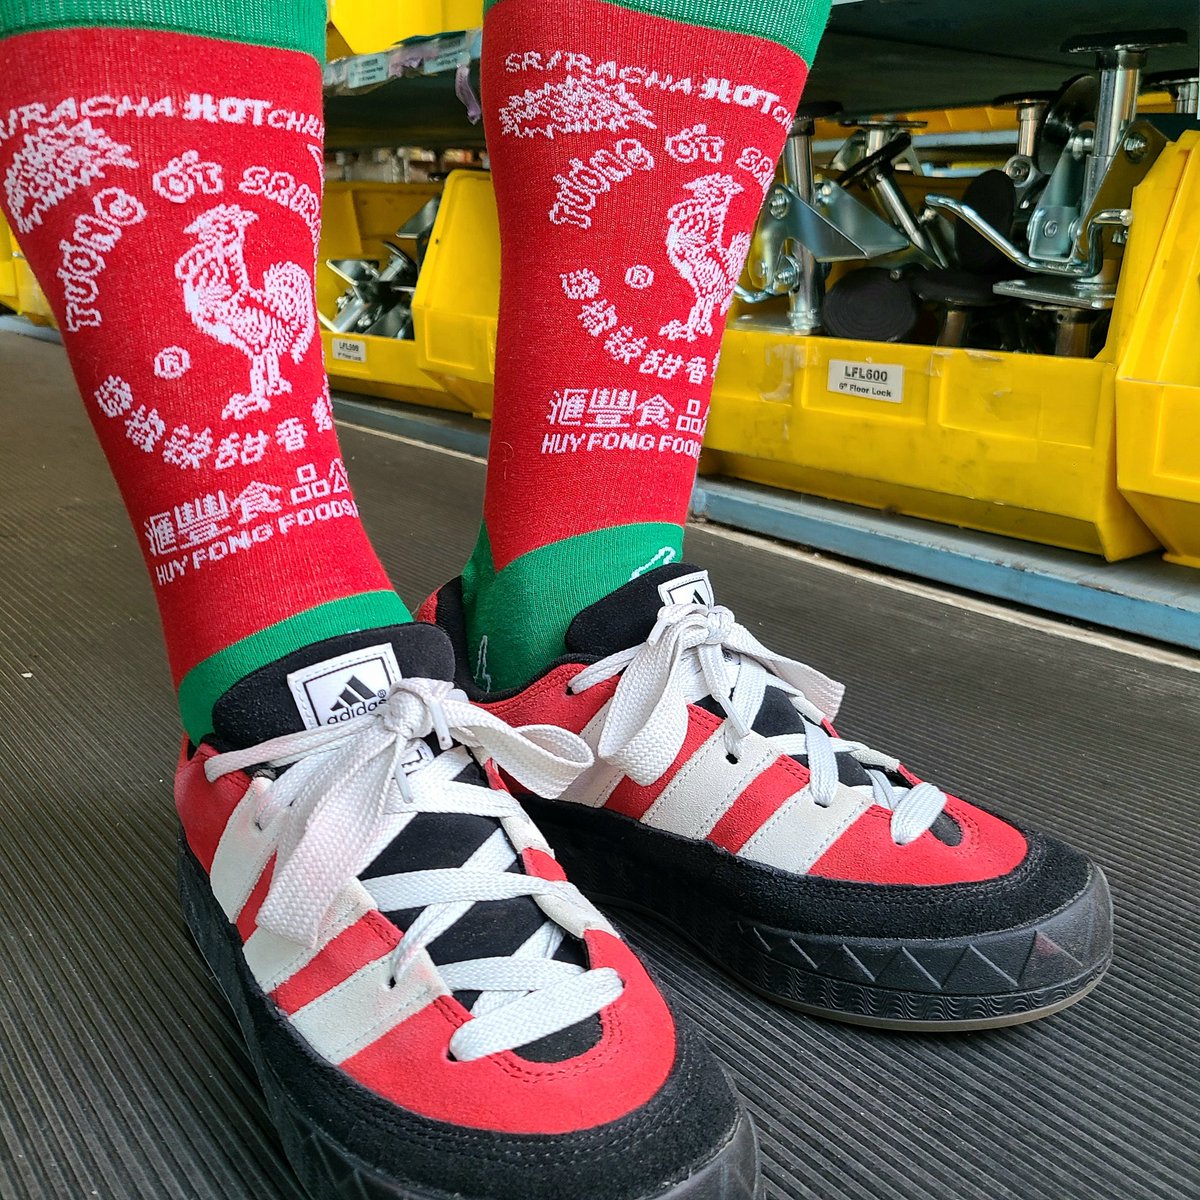 Sriracha Hot Sauce Socks & Adidas Adimatic Skate Shoes #sriracha #srirachasocks #tacotuesday #huyfongfoods @huyfongfoods #popculture #ootd #sotd @adidas @adidasoriginals @adidasskateboarding #adidasadimatic #adimatic #adidasskateboarding #yesadidas #threestripes #threestripelife